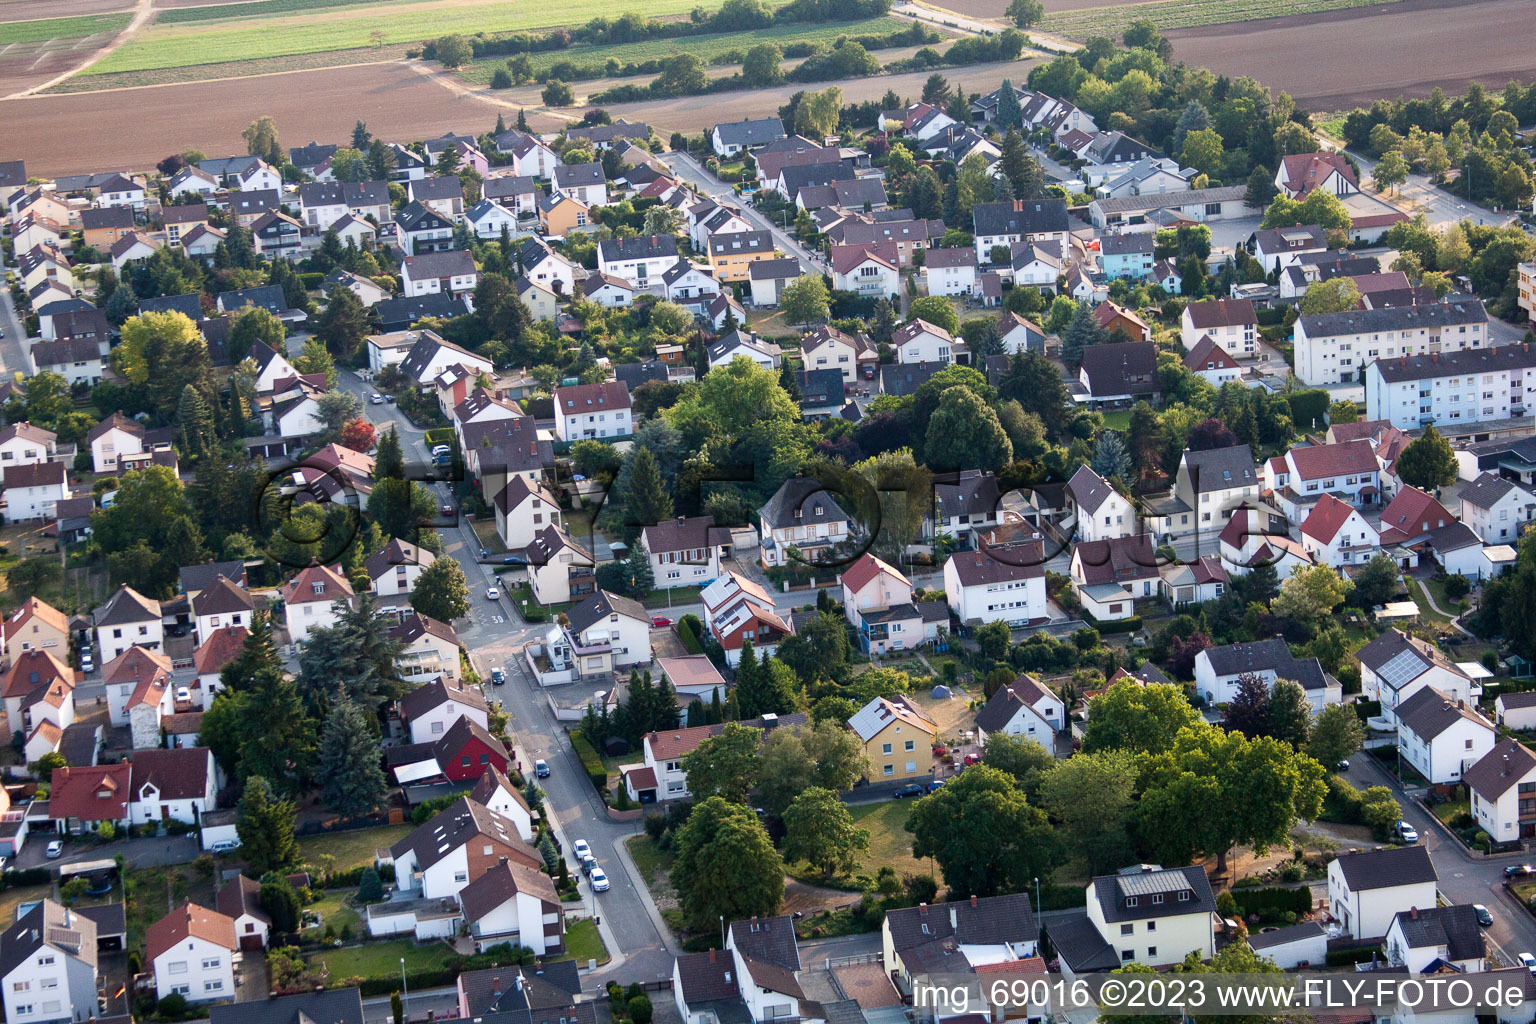 District Dannstadt in Dannstadt-Schauernheim in the state Rhineland-Palatinate, Germany from the drone perspective